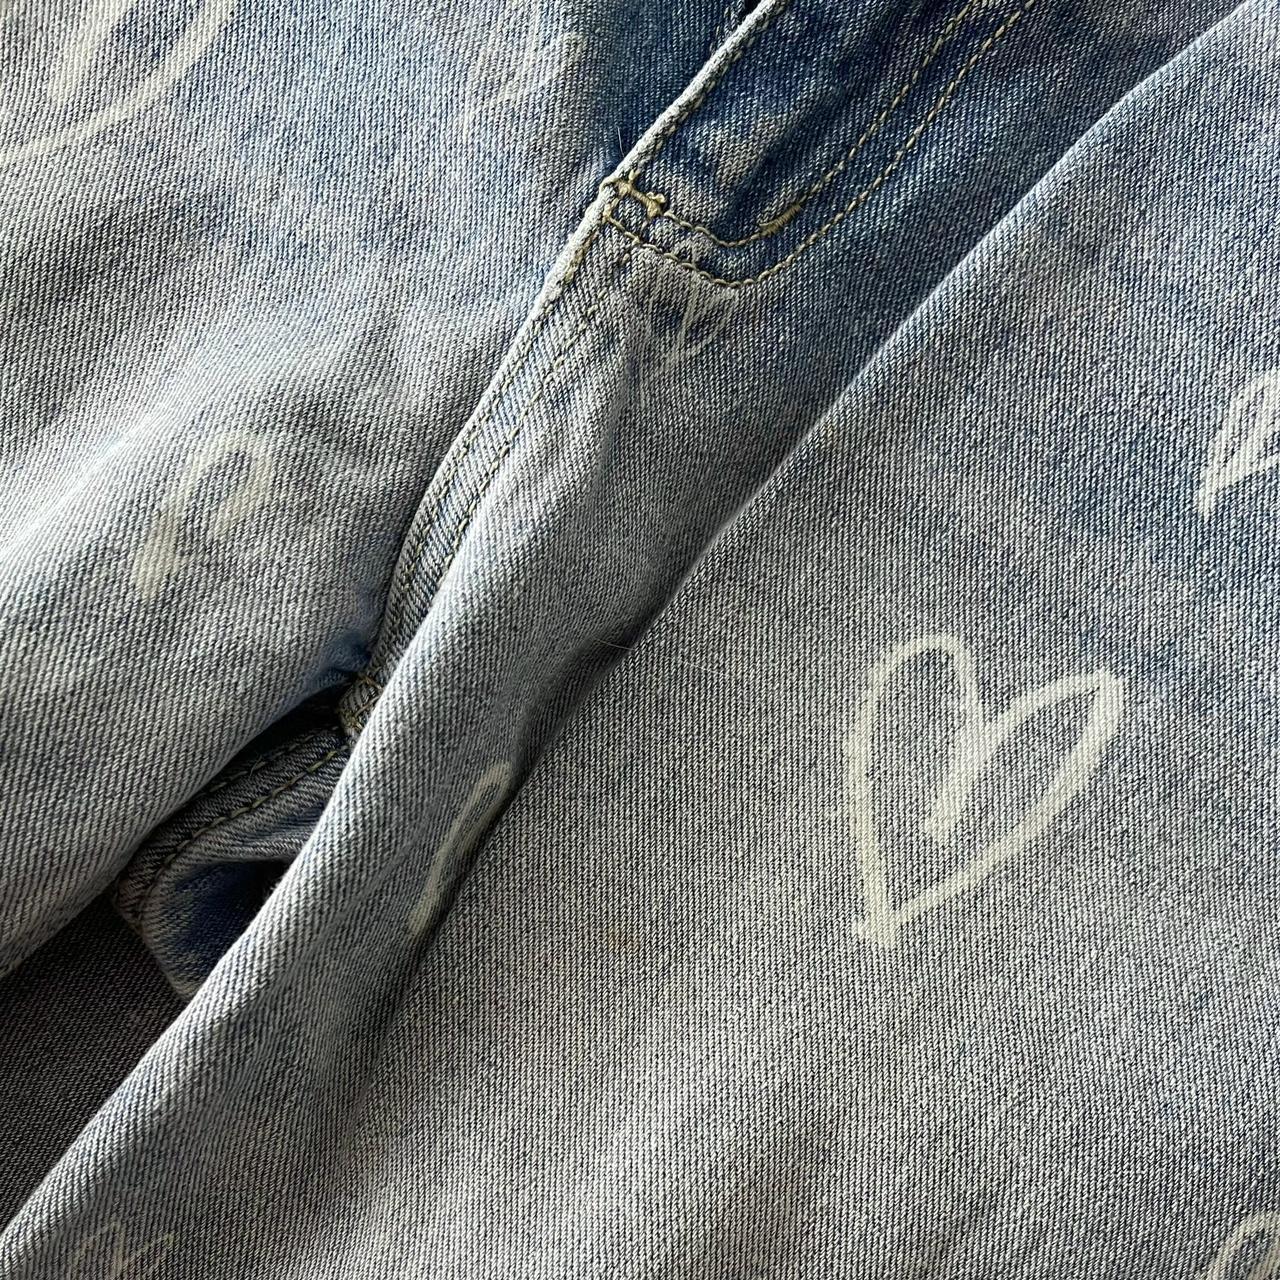 Heart Crop Jeans 💙💙💙 Brand: No Boundaries Size: 7 - Depop